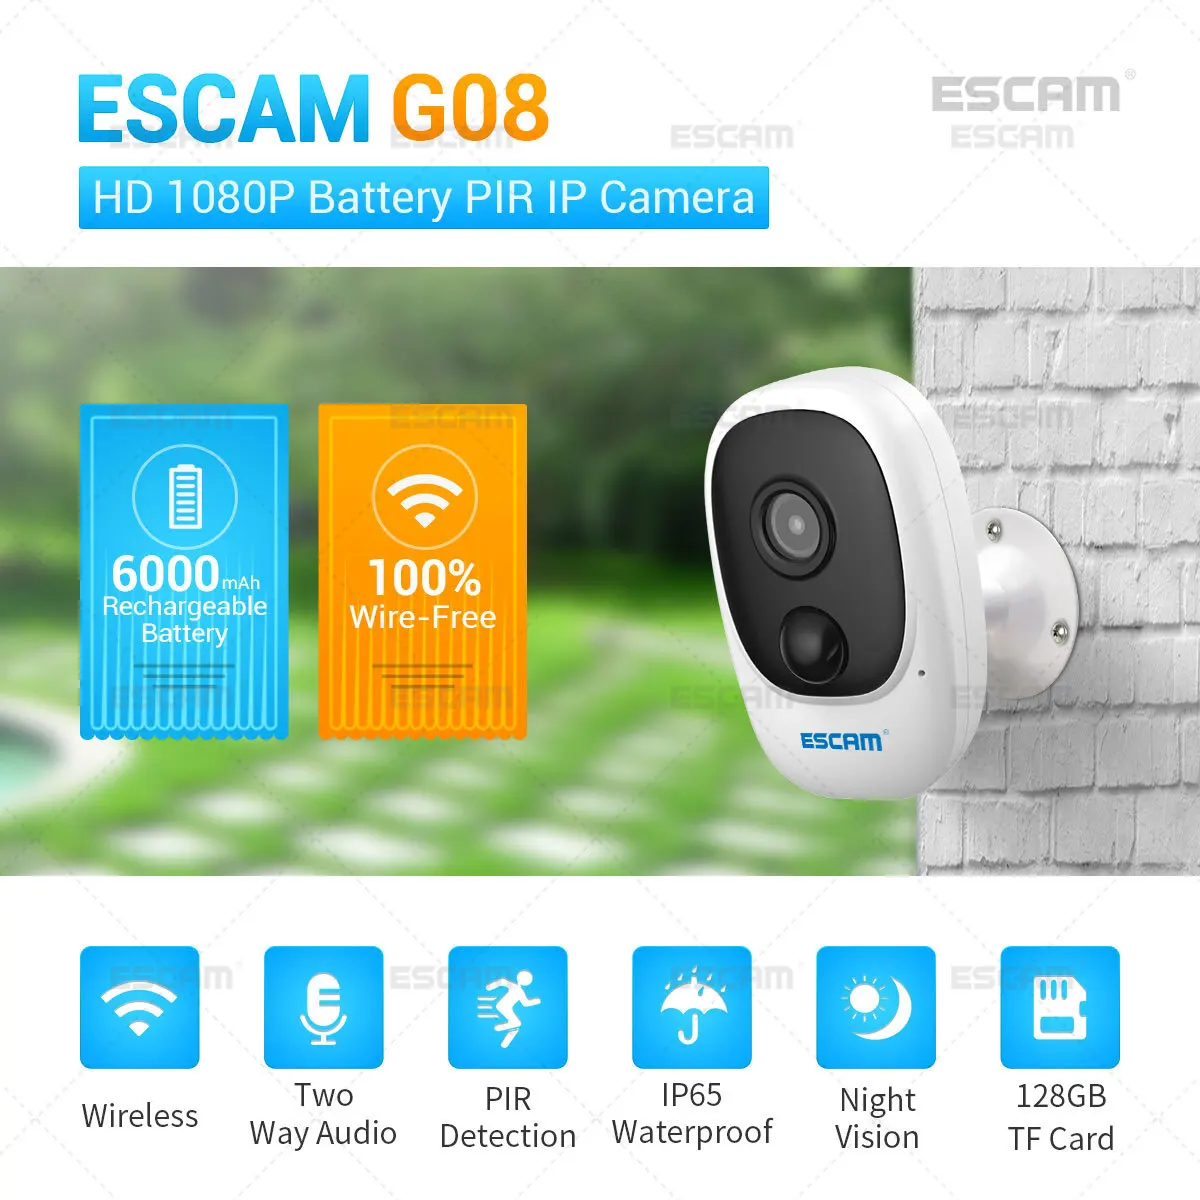 

ESCAM G08 1080P Full HD Outdoor Indoor Rechargeable Battery PIR Alarm WiFi Camera